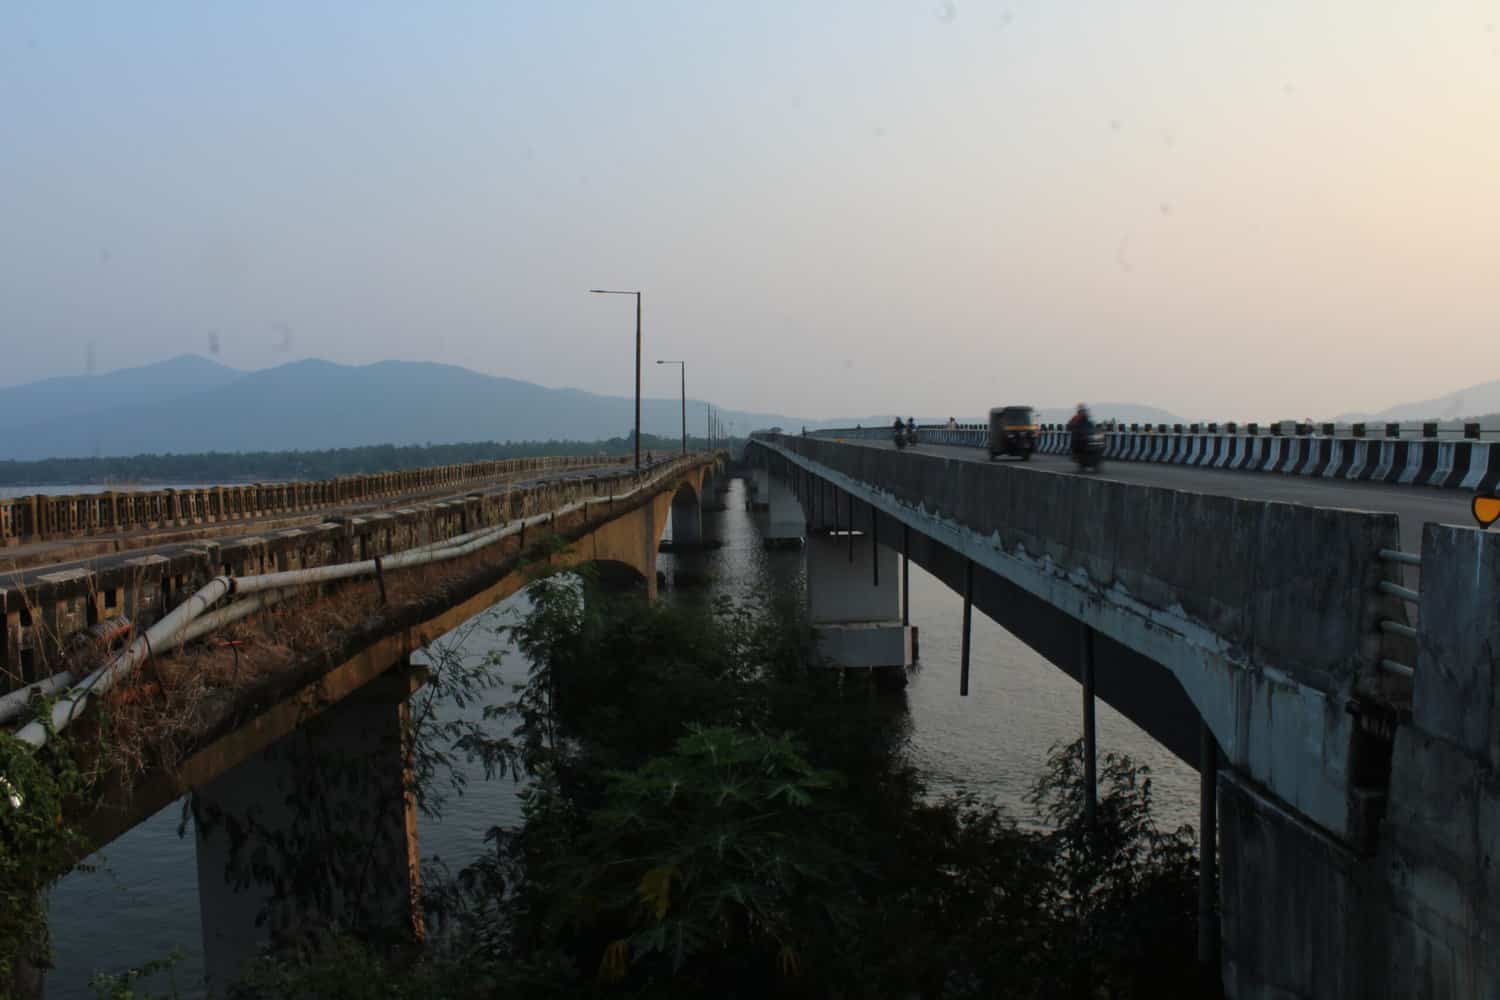 Kali river bridge, Karwar, Karnataka